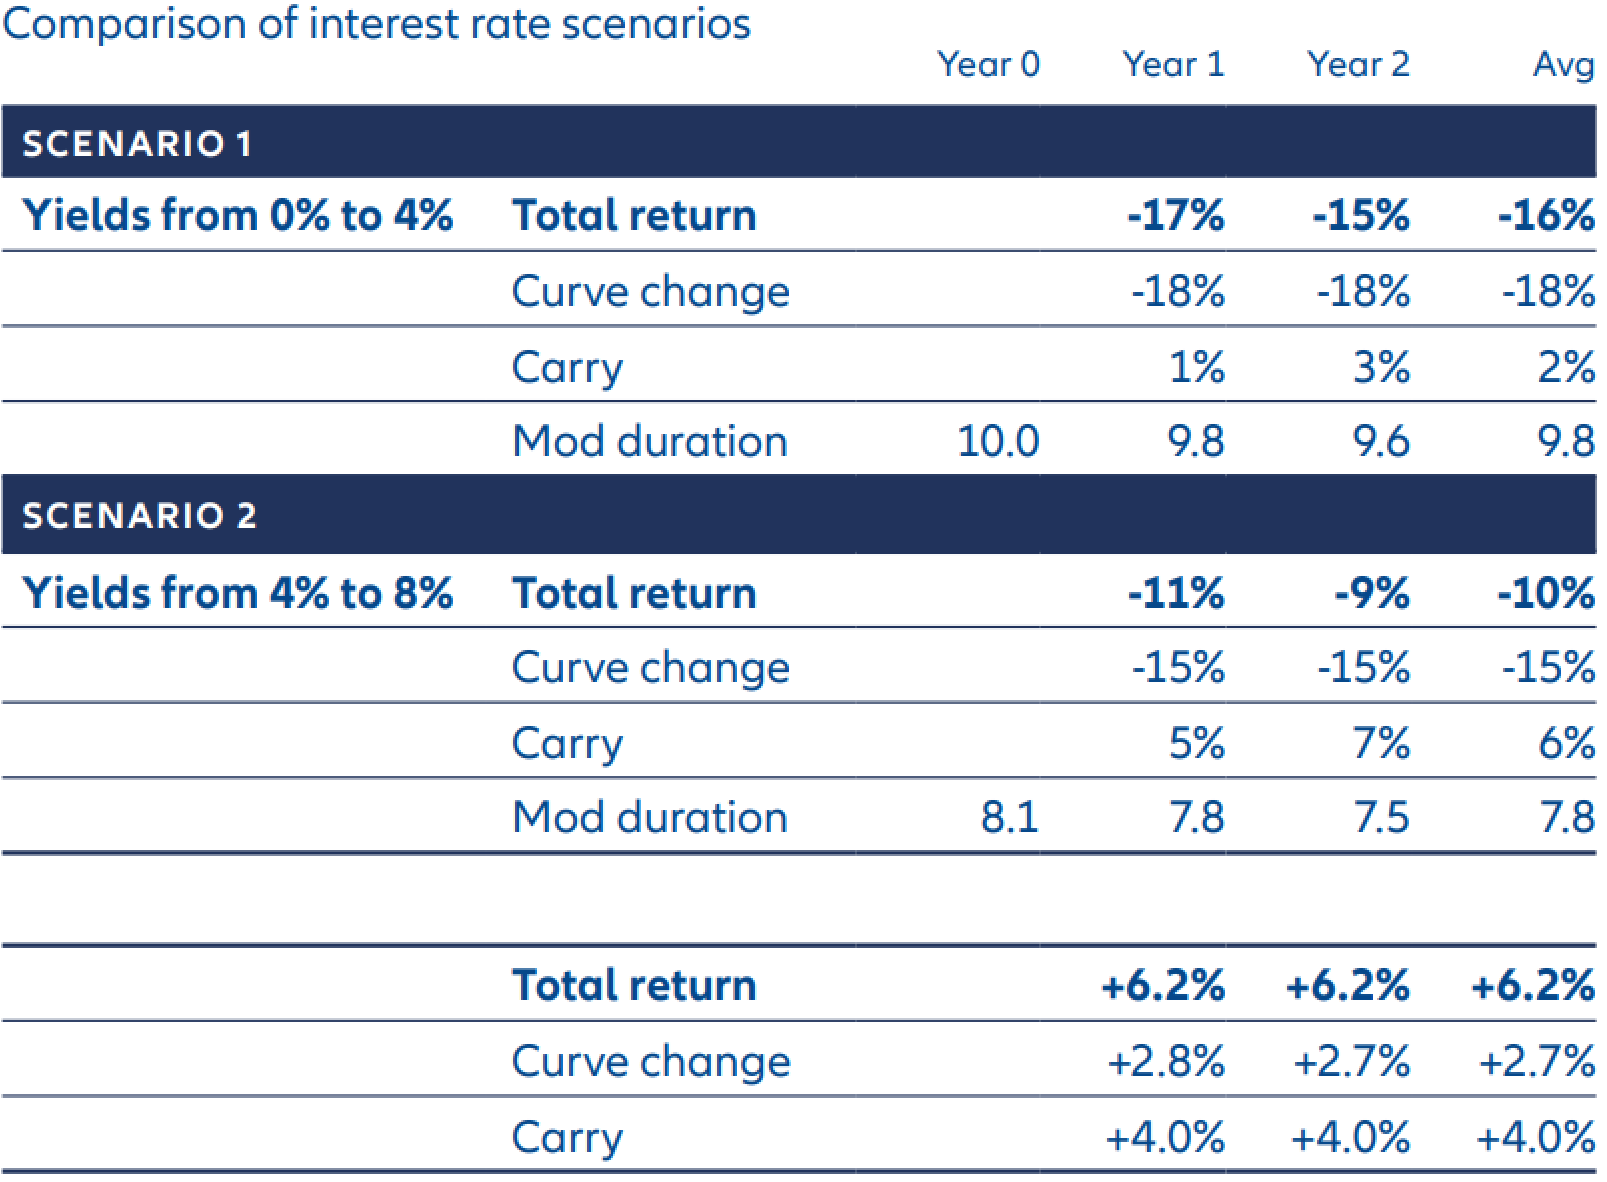 Exhibit 2: Interest rate scenarios and corresponding bond returns